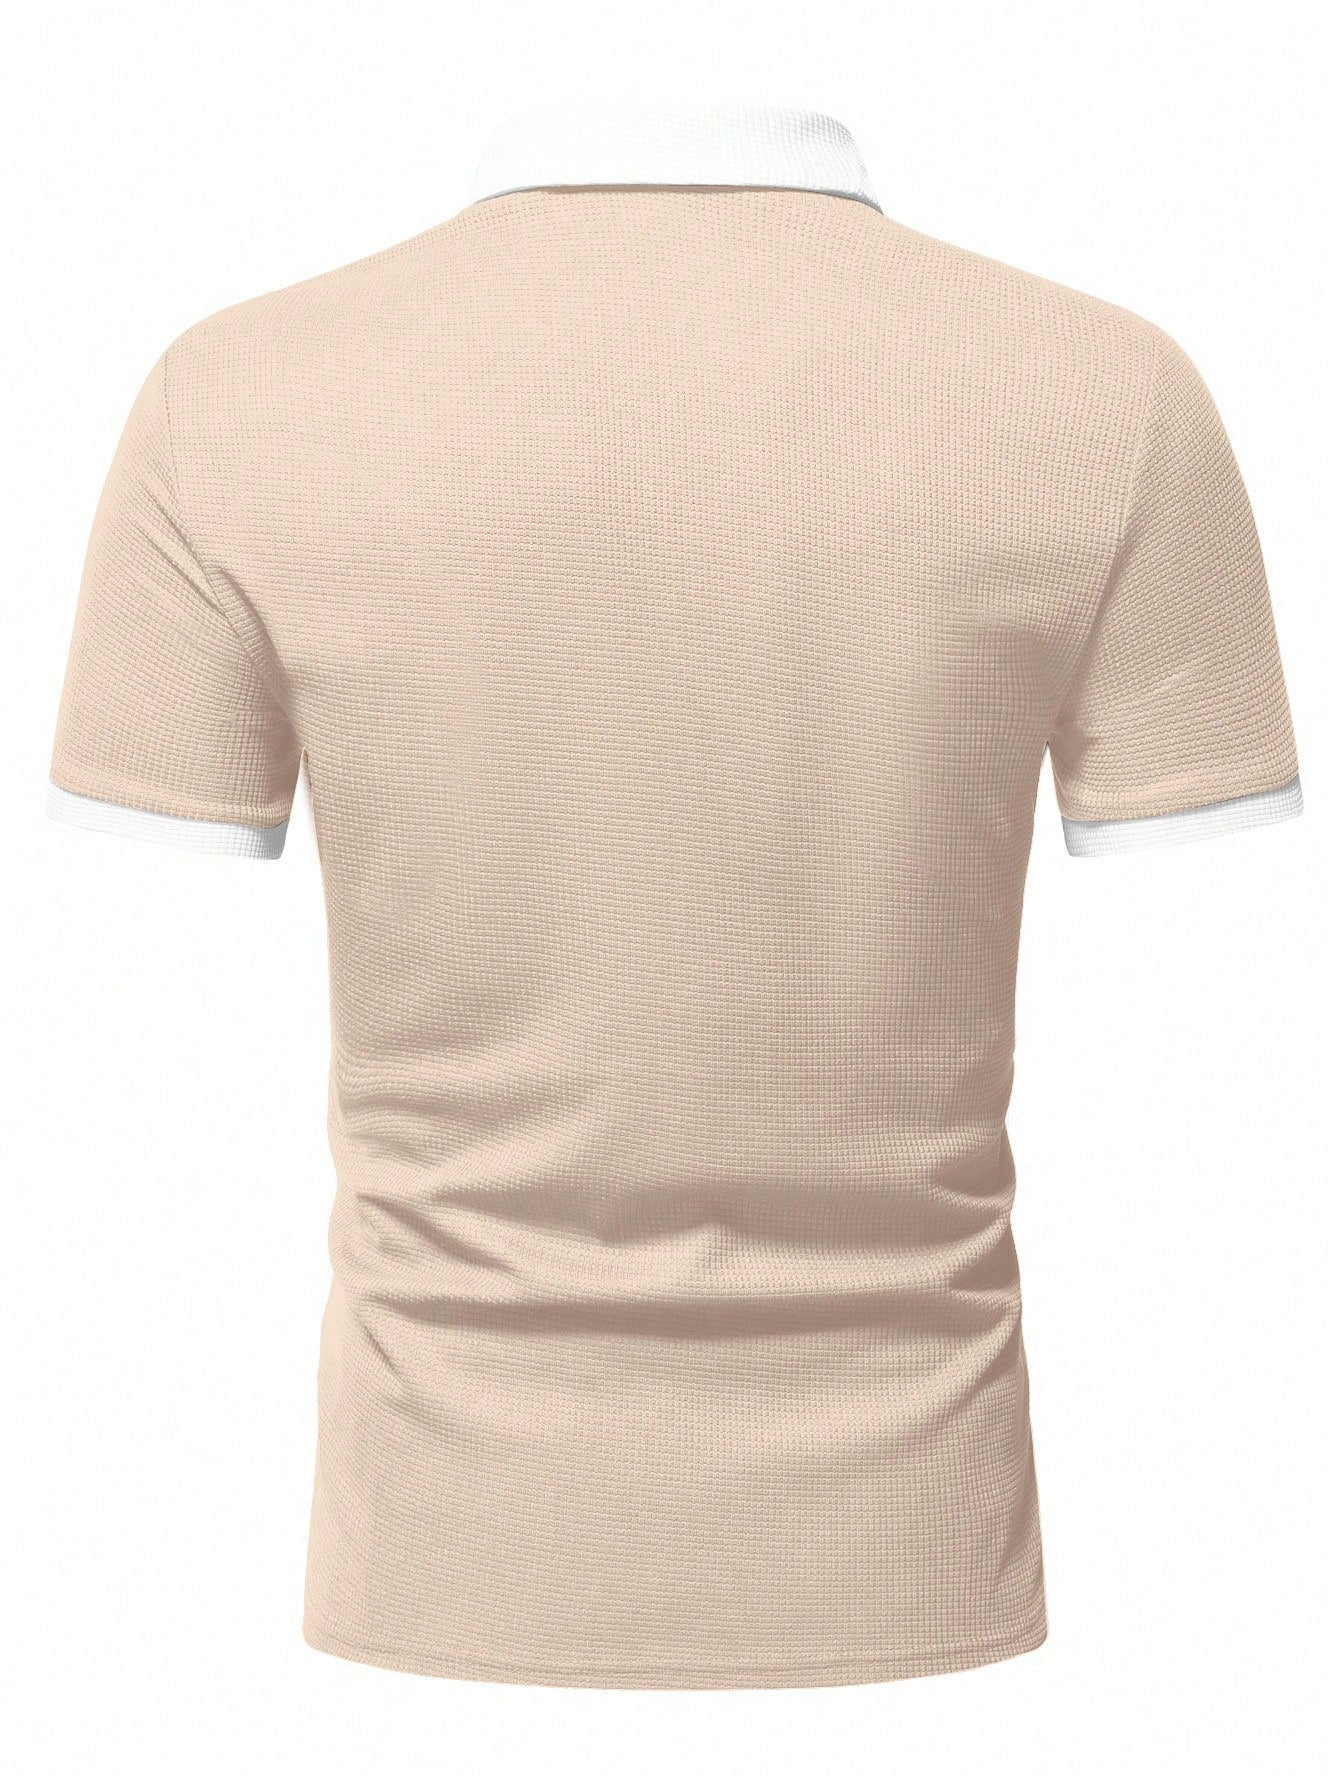 Men's Summer Two Tone Short Sleeve Polo Shirt.